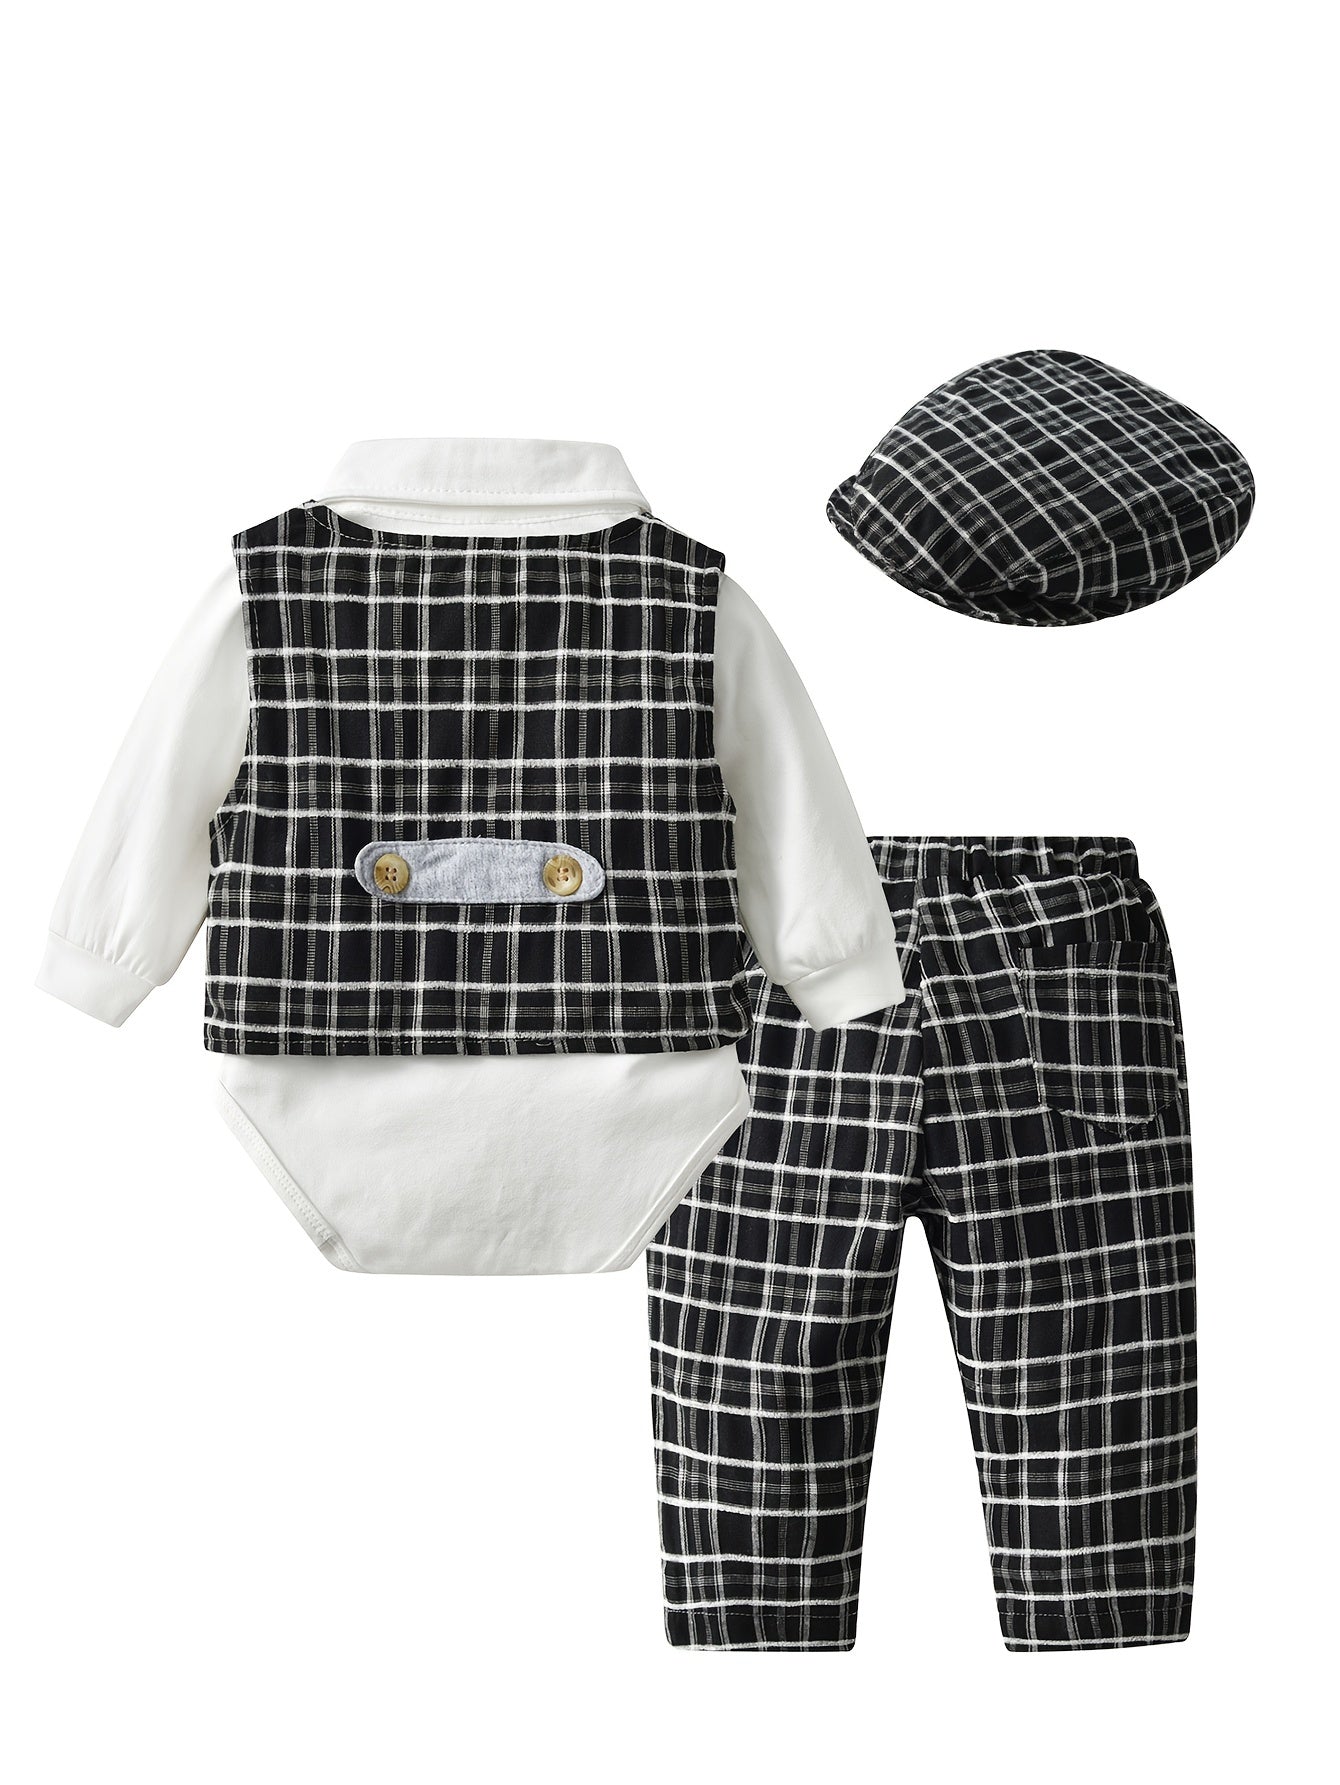 Gentleman Style Baby Boys Cotton Outfit -  Lapel Button Down Bow Plaid Fake Two-Piece Vest Romper + Plaid Pants + Hat 3pcs Suit - Birthday Party Wedding Dress Up